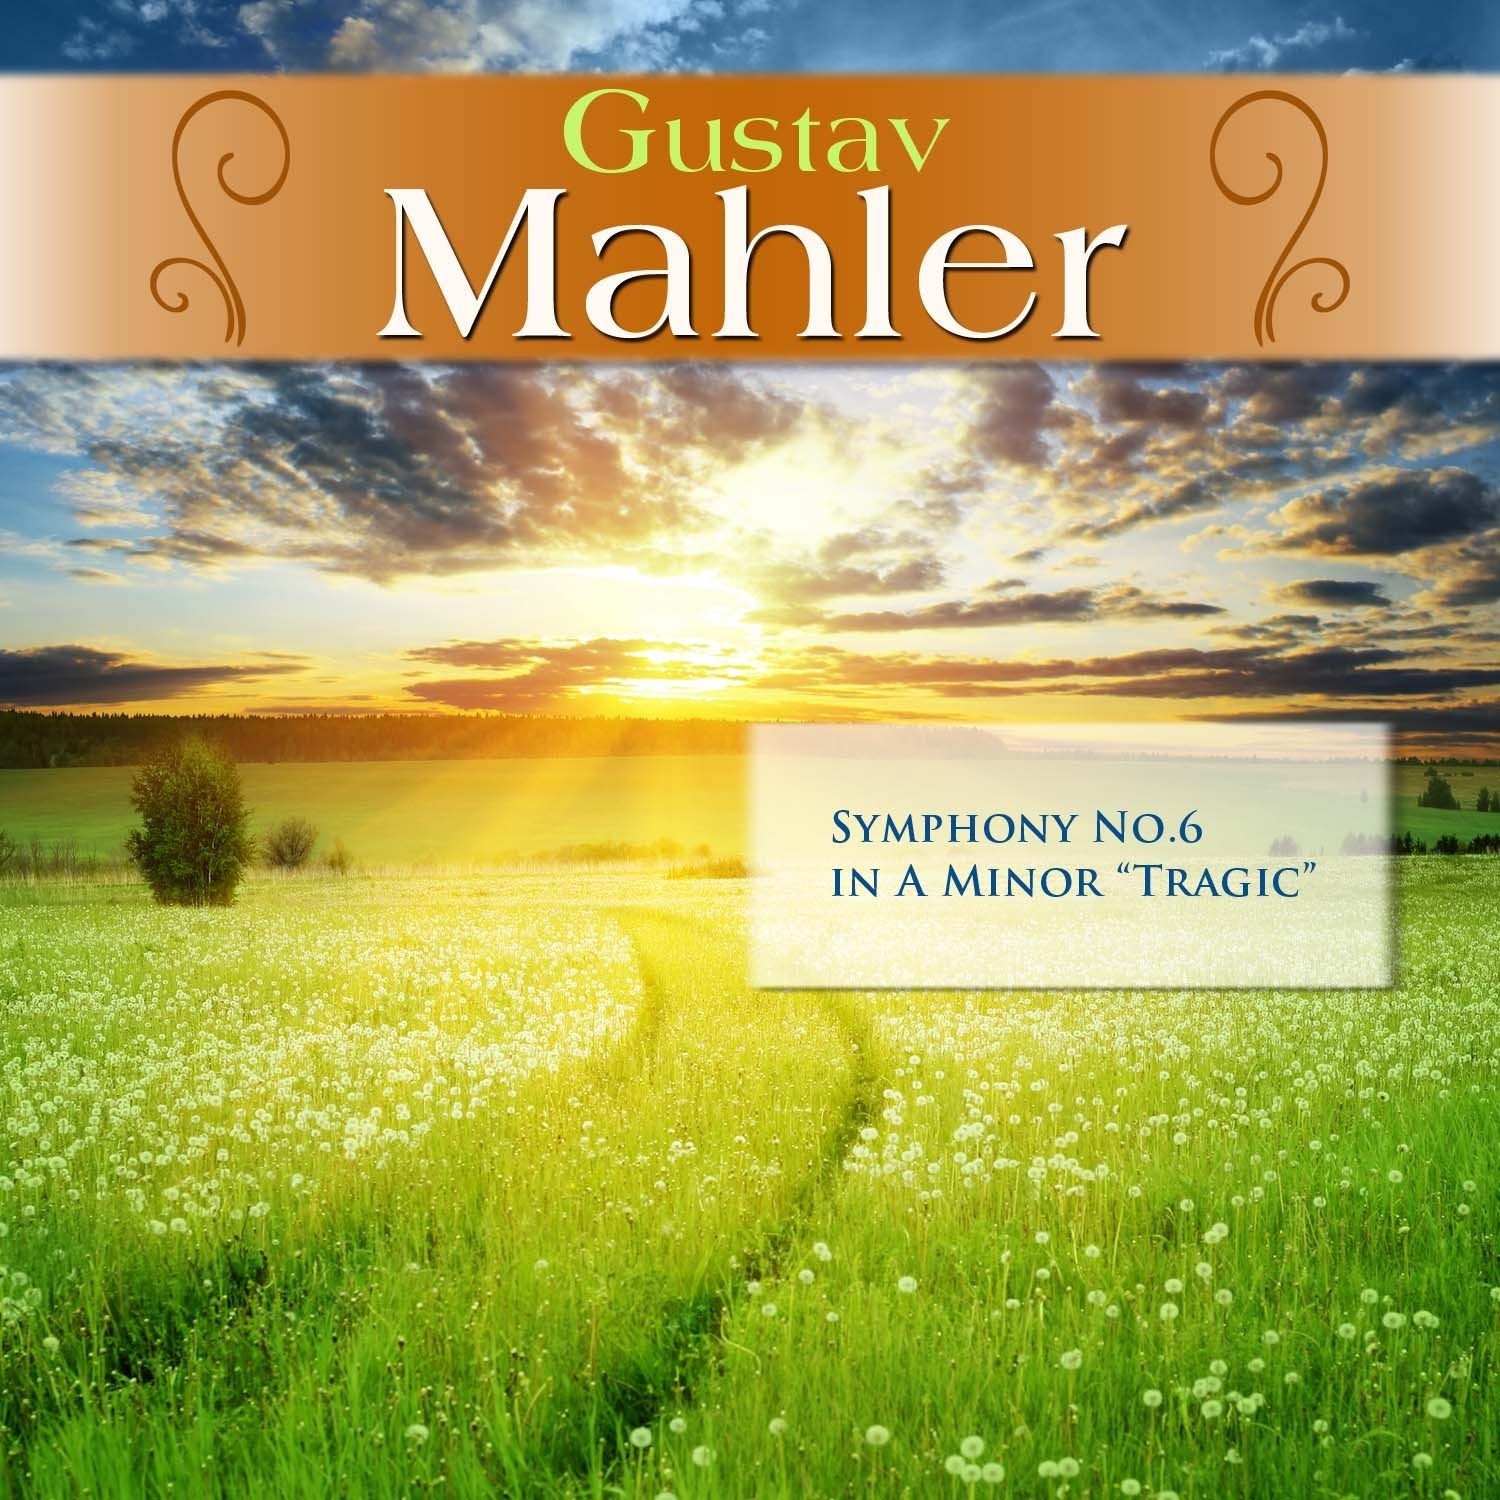 Gustav Mahler: Symphony No.6 in A Minor "Tragic"